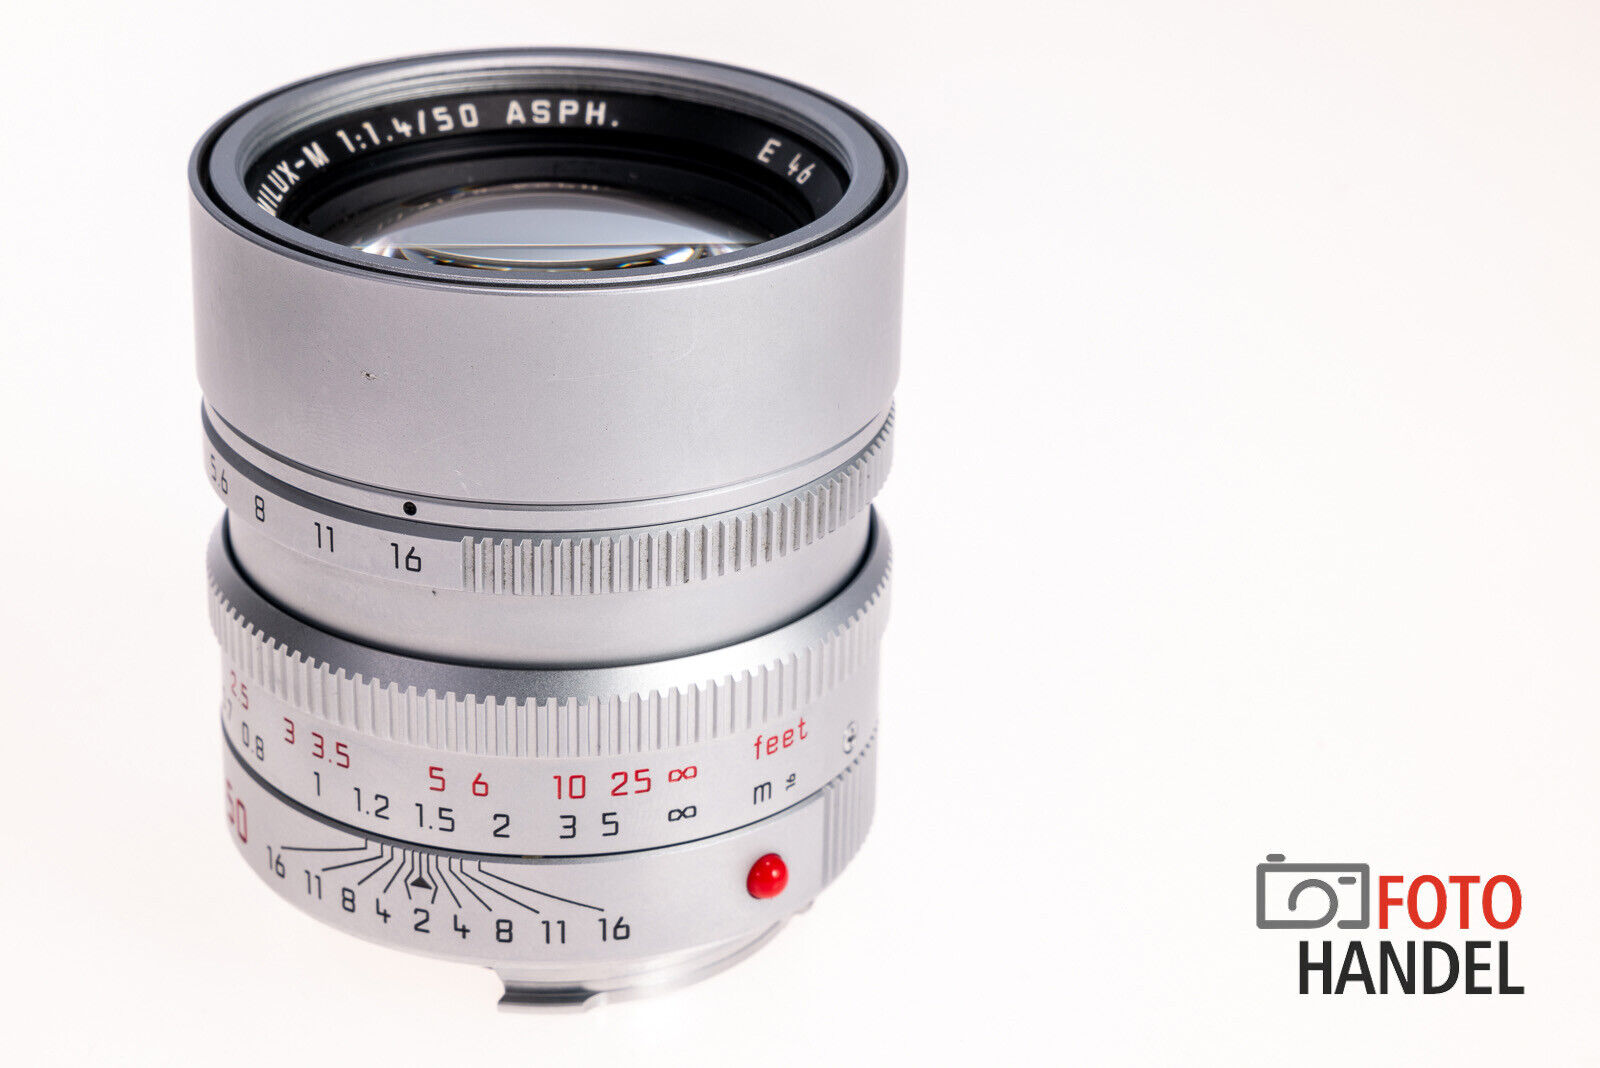 Leica Summilux-M 50mm 1.4 chrome ASPH - 11892 6-Bit | Trübung